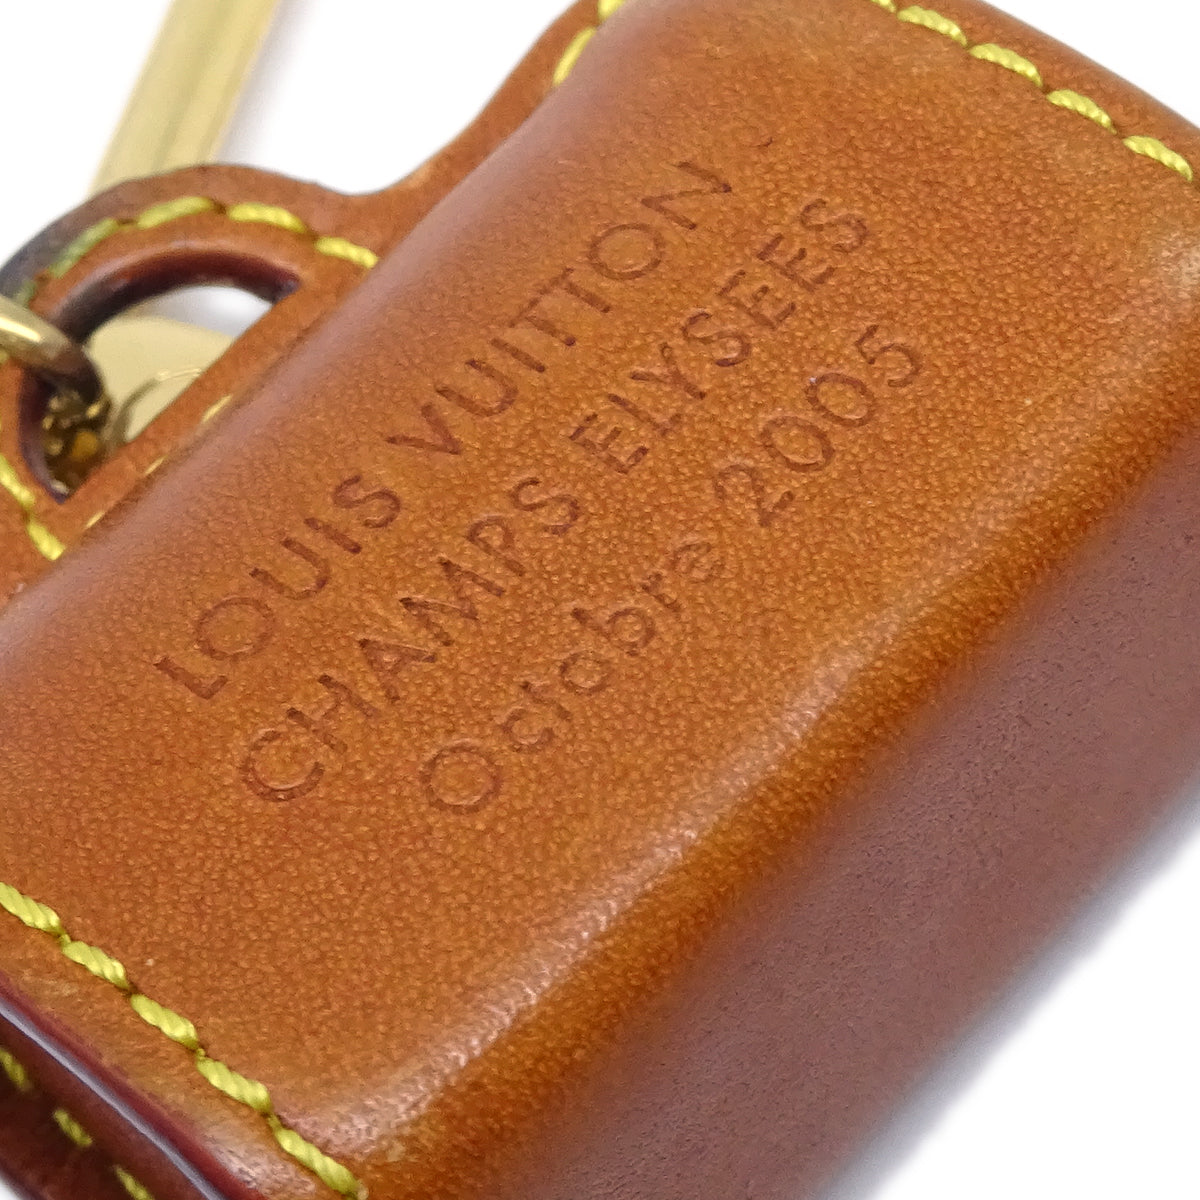 Louis Vuitton Porte Cles Speedy 鑰匙扣 M99206 小號好貨